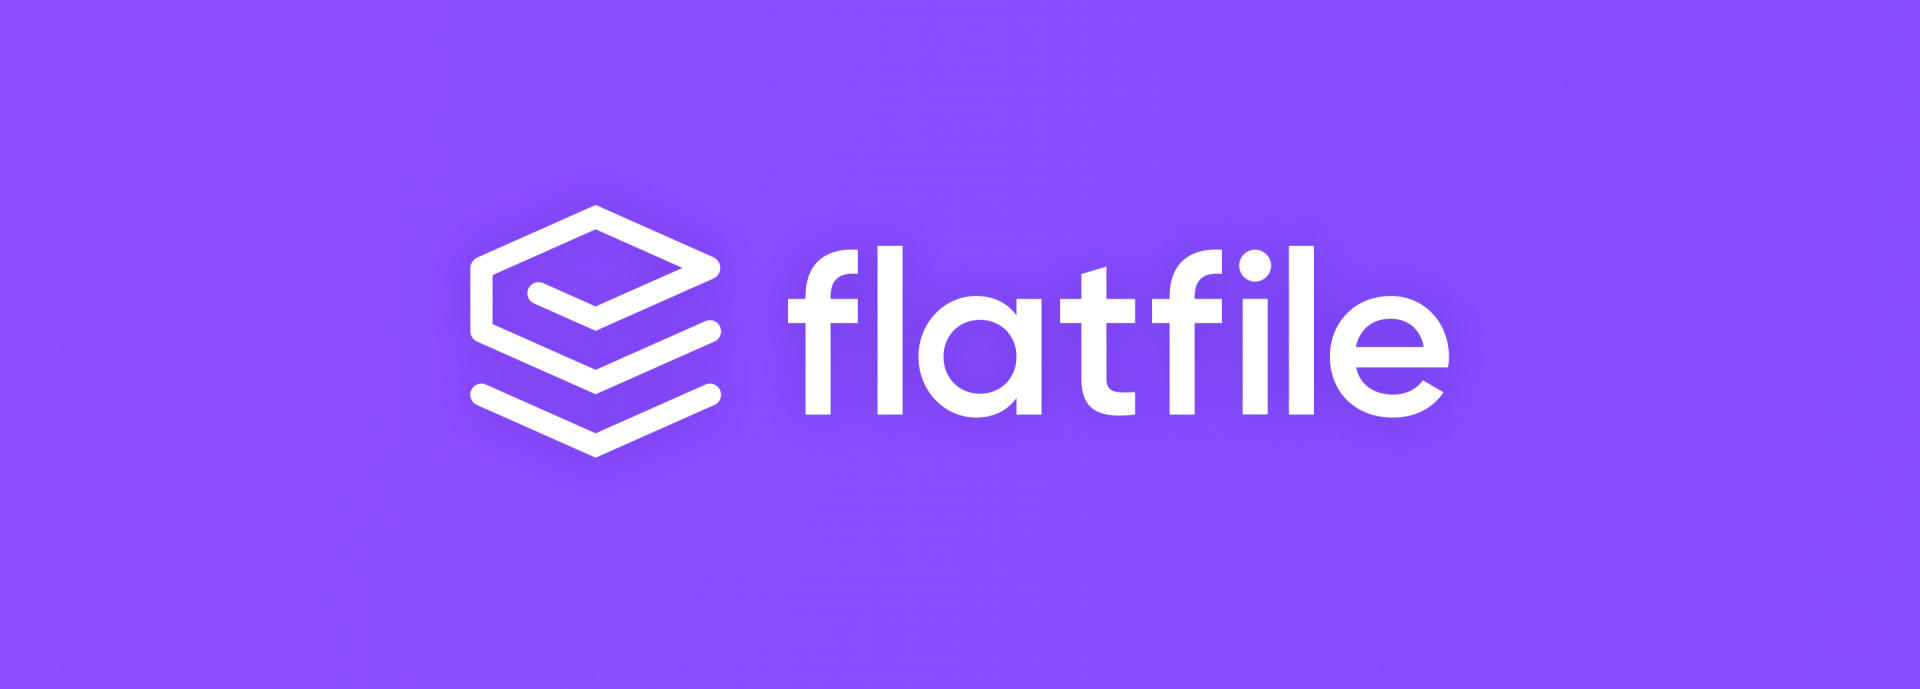 Flatfile Announcement Post Header